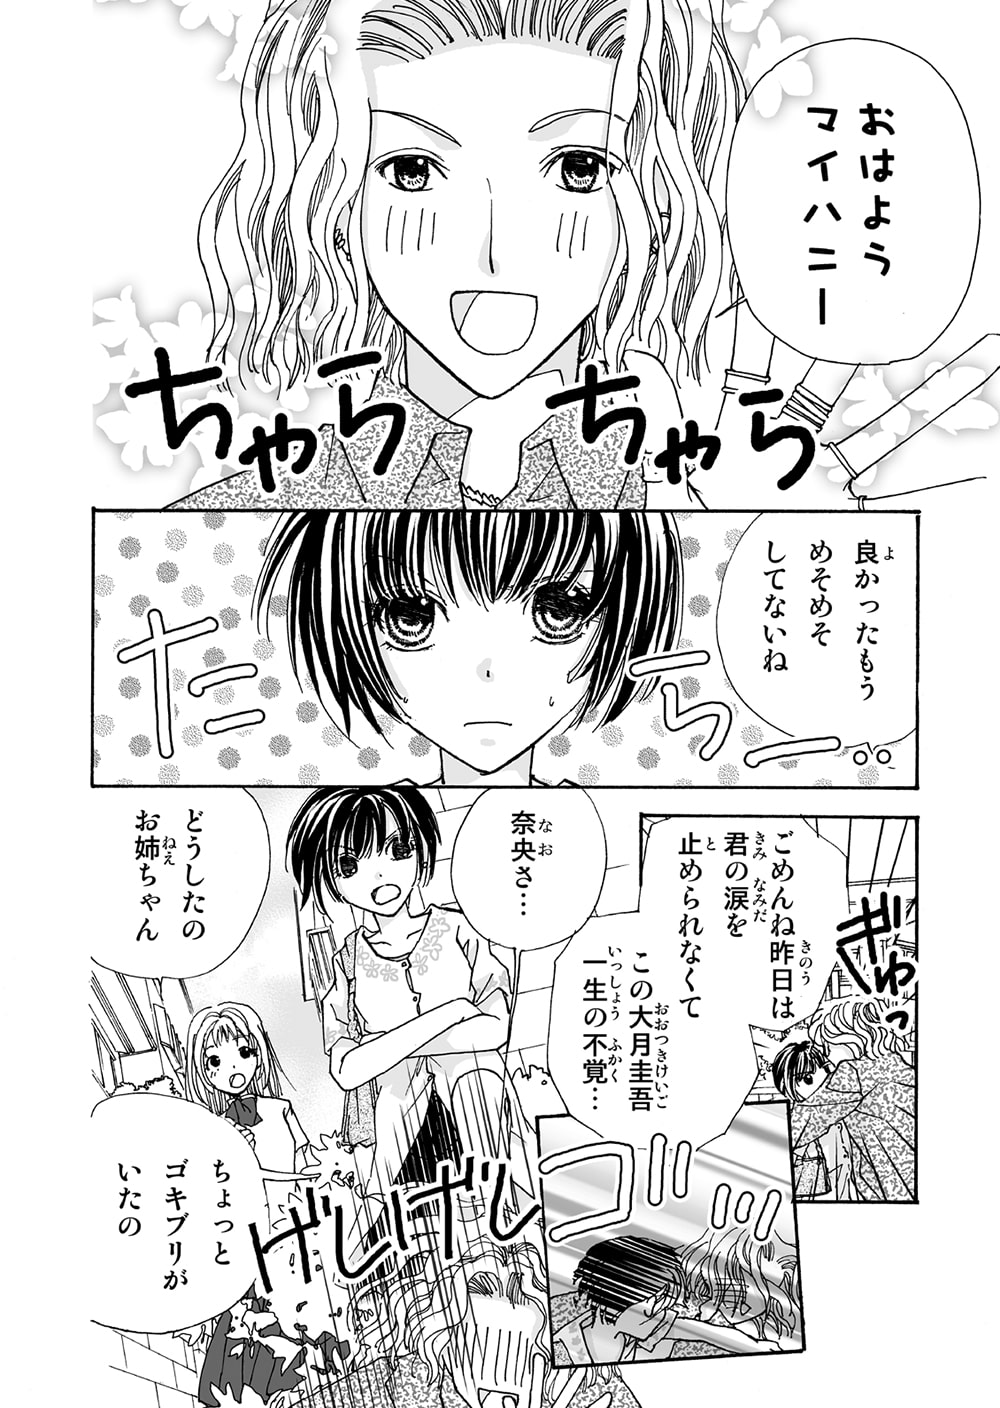 Love Expressions By Scene アニメ マンガの日本語 Japanese In Anime Manga